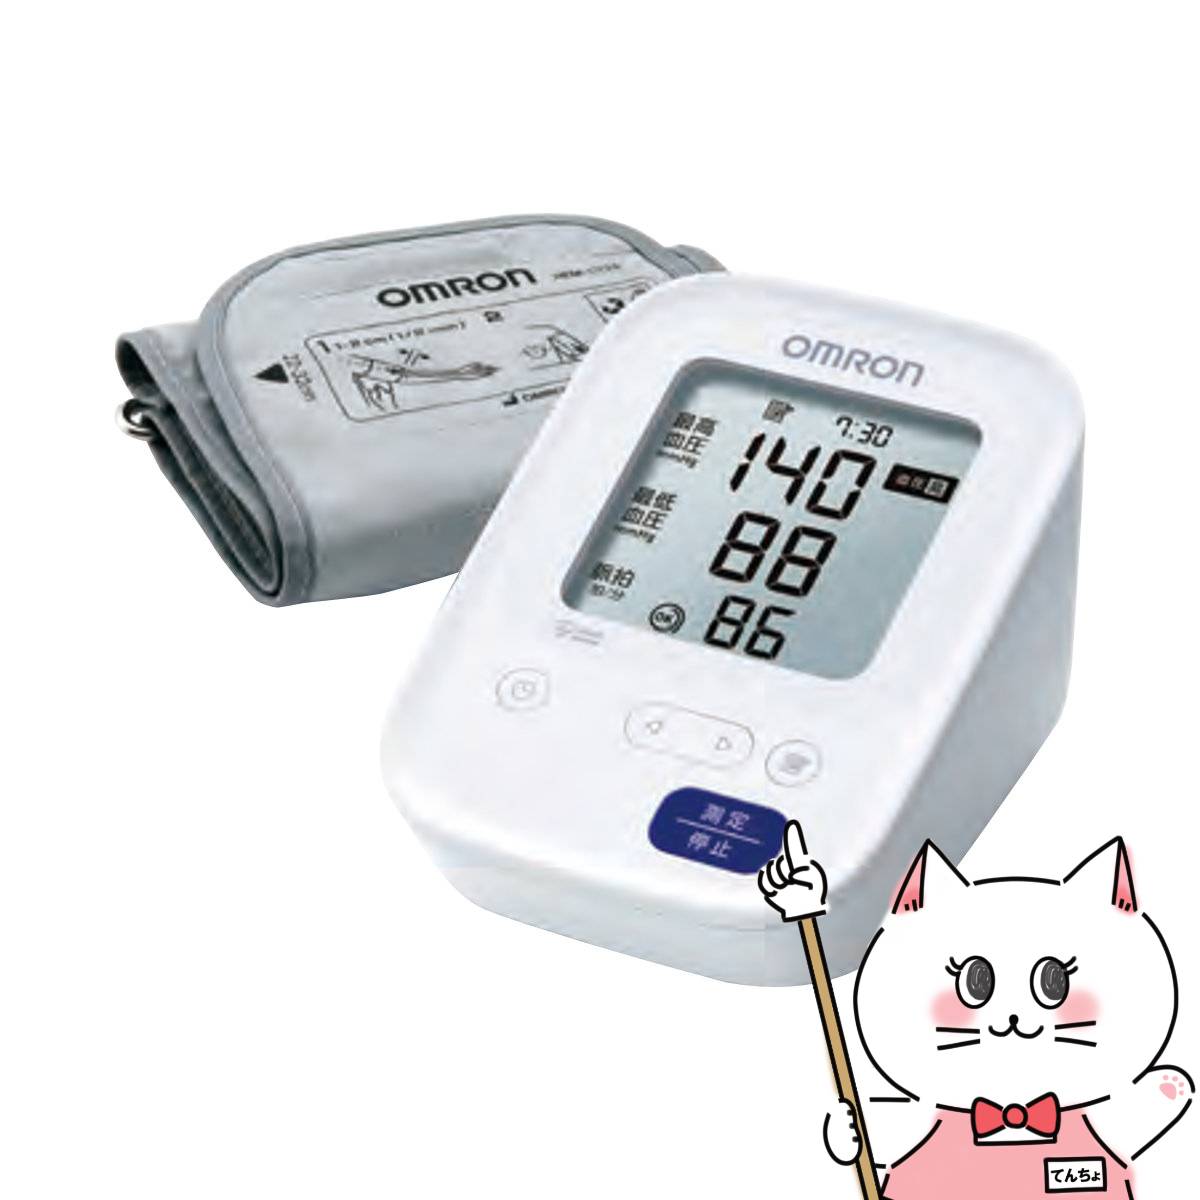 【クーポン配布中】オムロン 上腕式血圧計 HEM-7107【別途延長保証契約可能】【宅配便送料無料】 6053244 